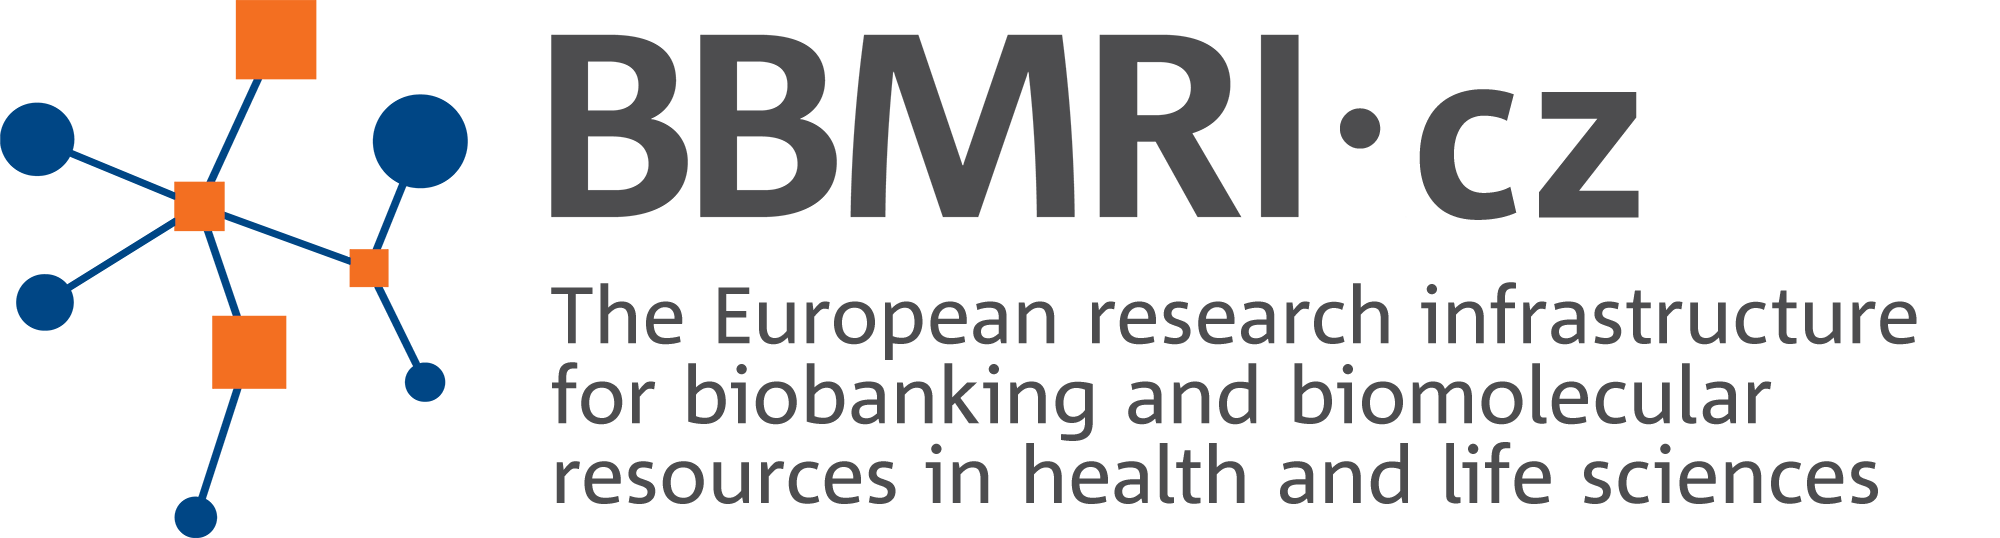 the bbmri-eric cz logo